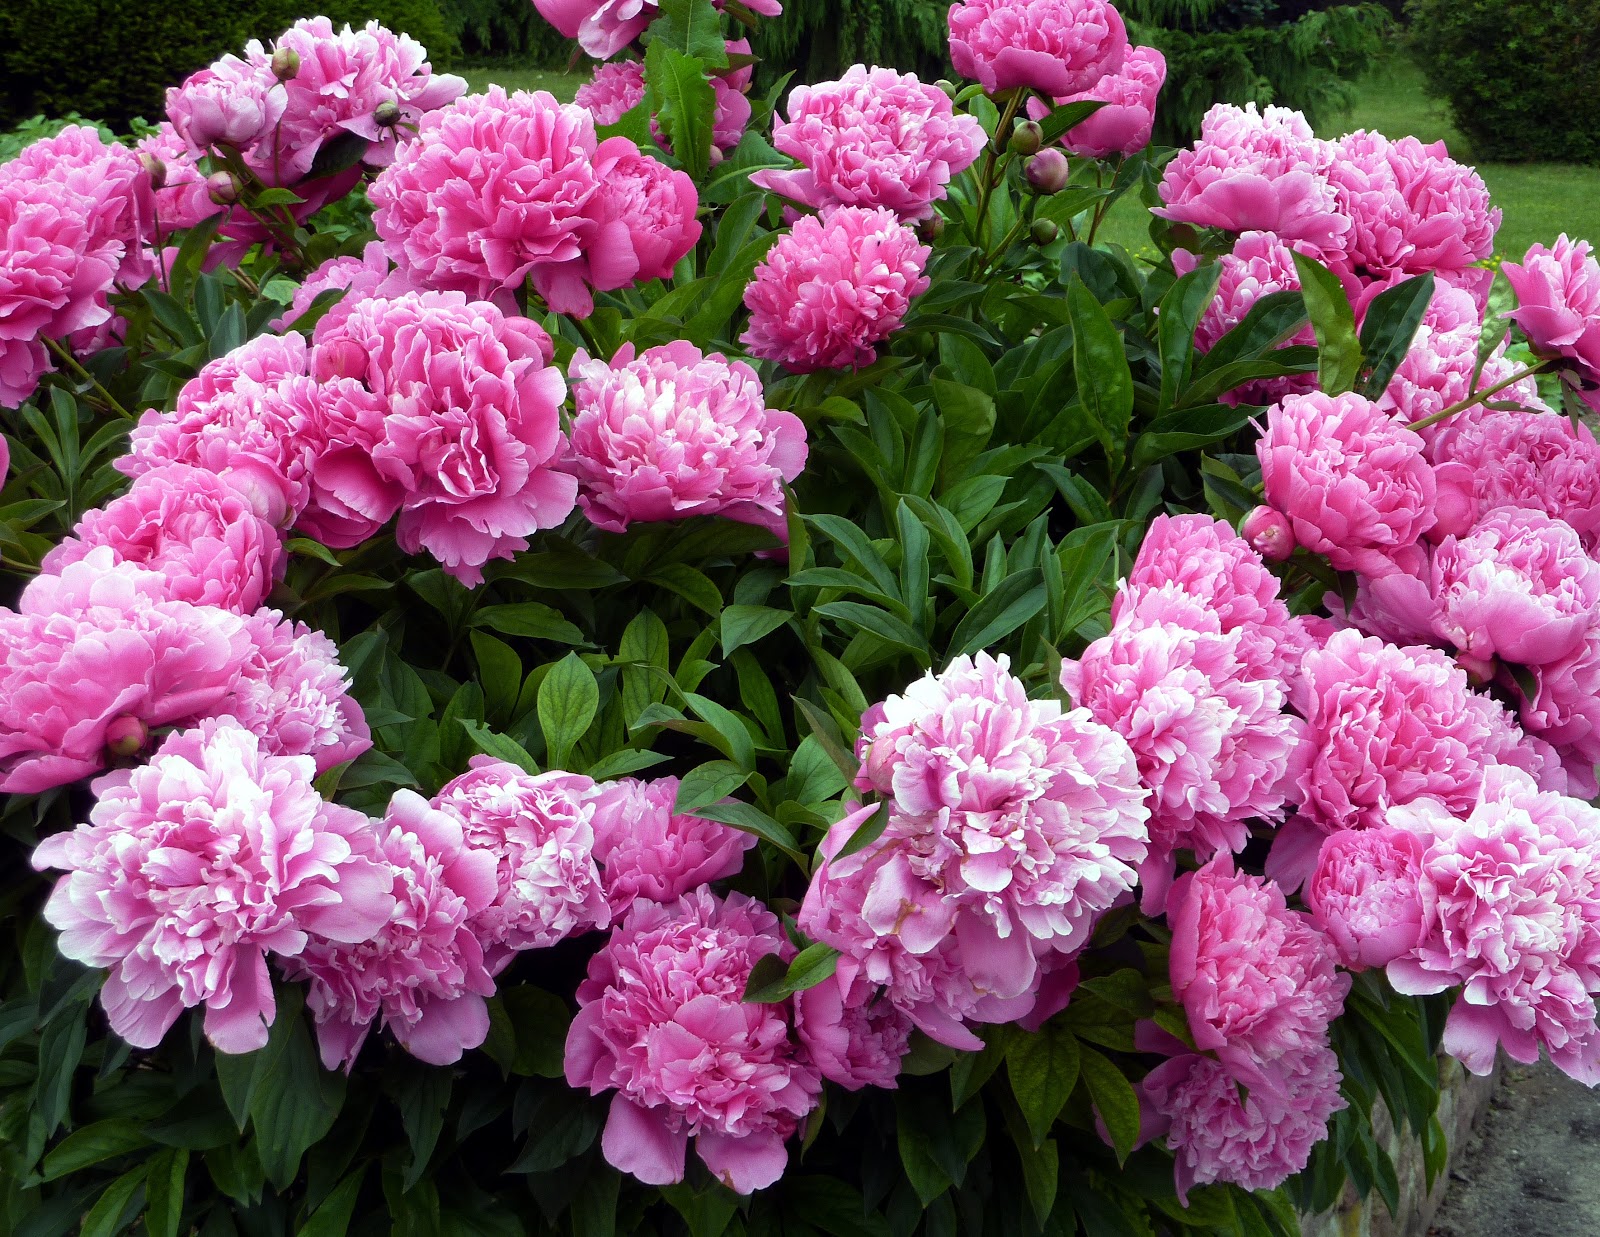 https://get.pxhere.com/photo/plant-field-flower-spring-garden-pink-hydrangea-flowers-petals-shrub-carnation-peony-dianthus-flowering-plant-peonies-hydrangeaceae-annual-plant-woody-plant-land-plant-rosa-centifolia-621920.jpg